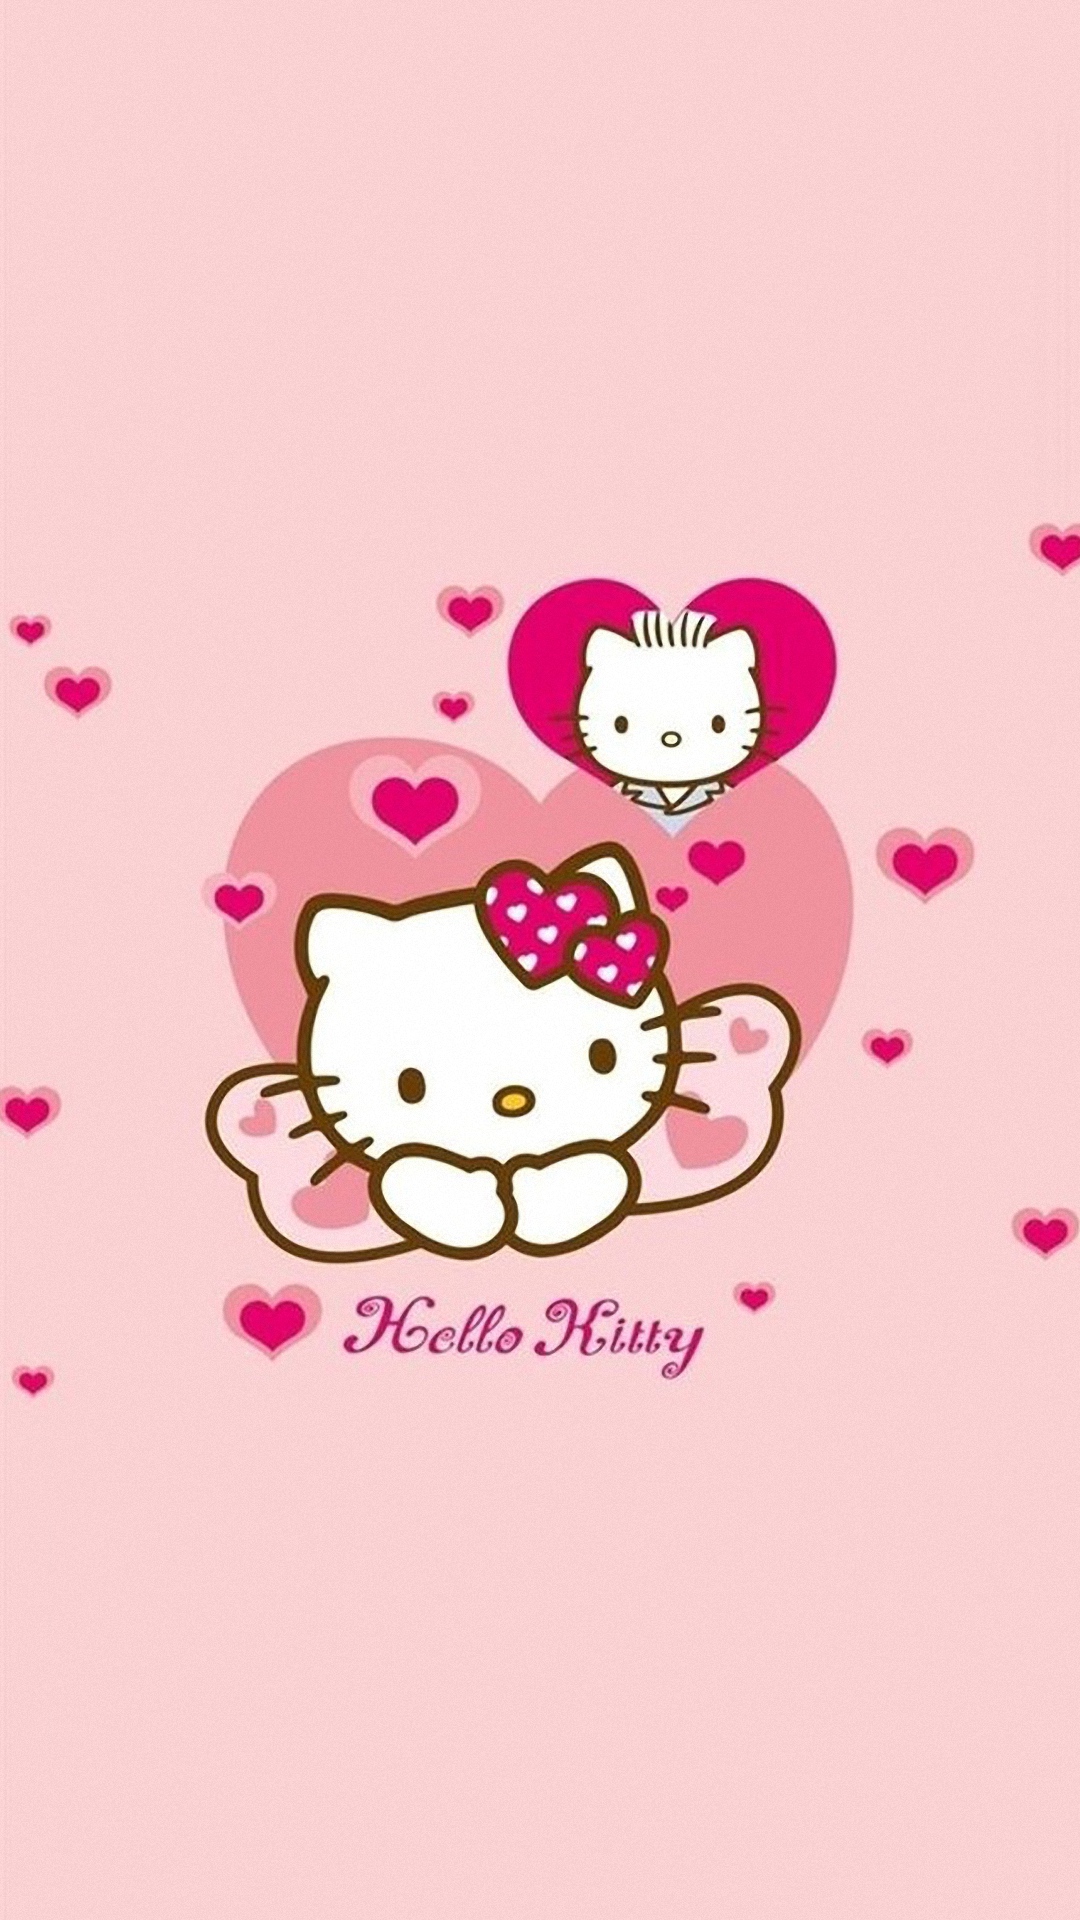 Cute Hello Kitty galaxy s4 s5 Wallpapers HD 1080x1920 1080x1920